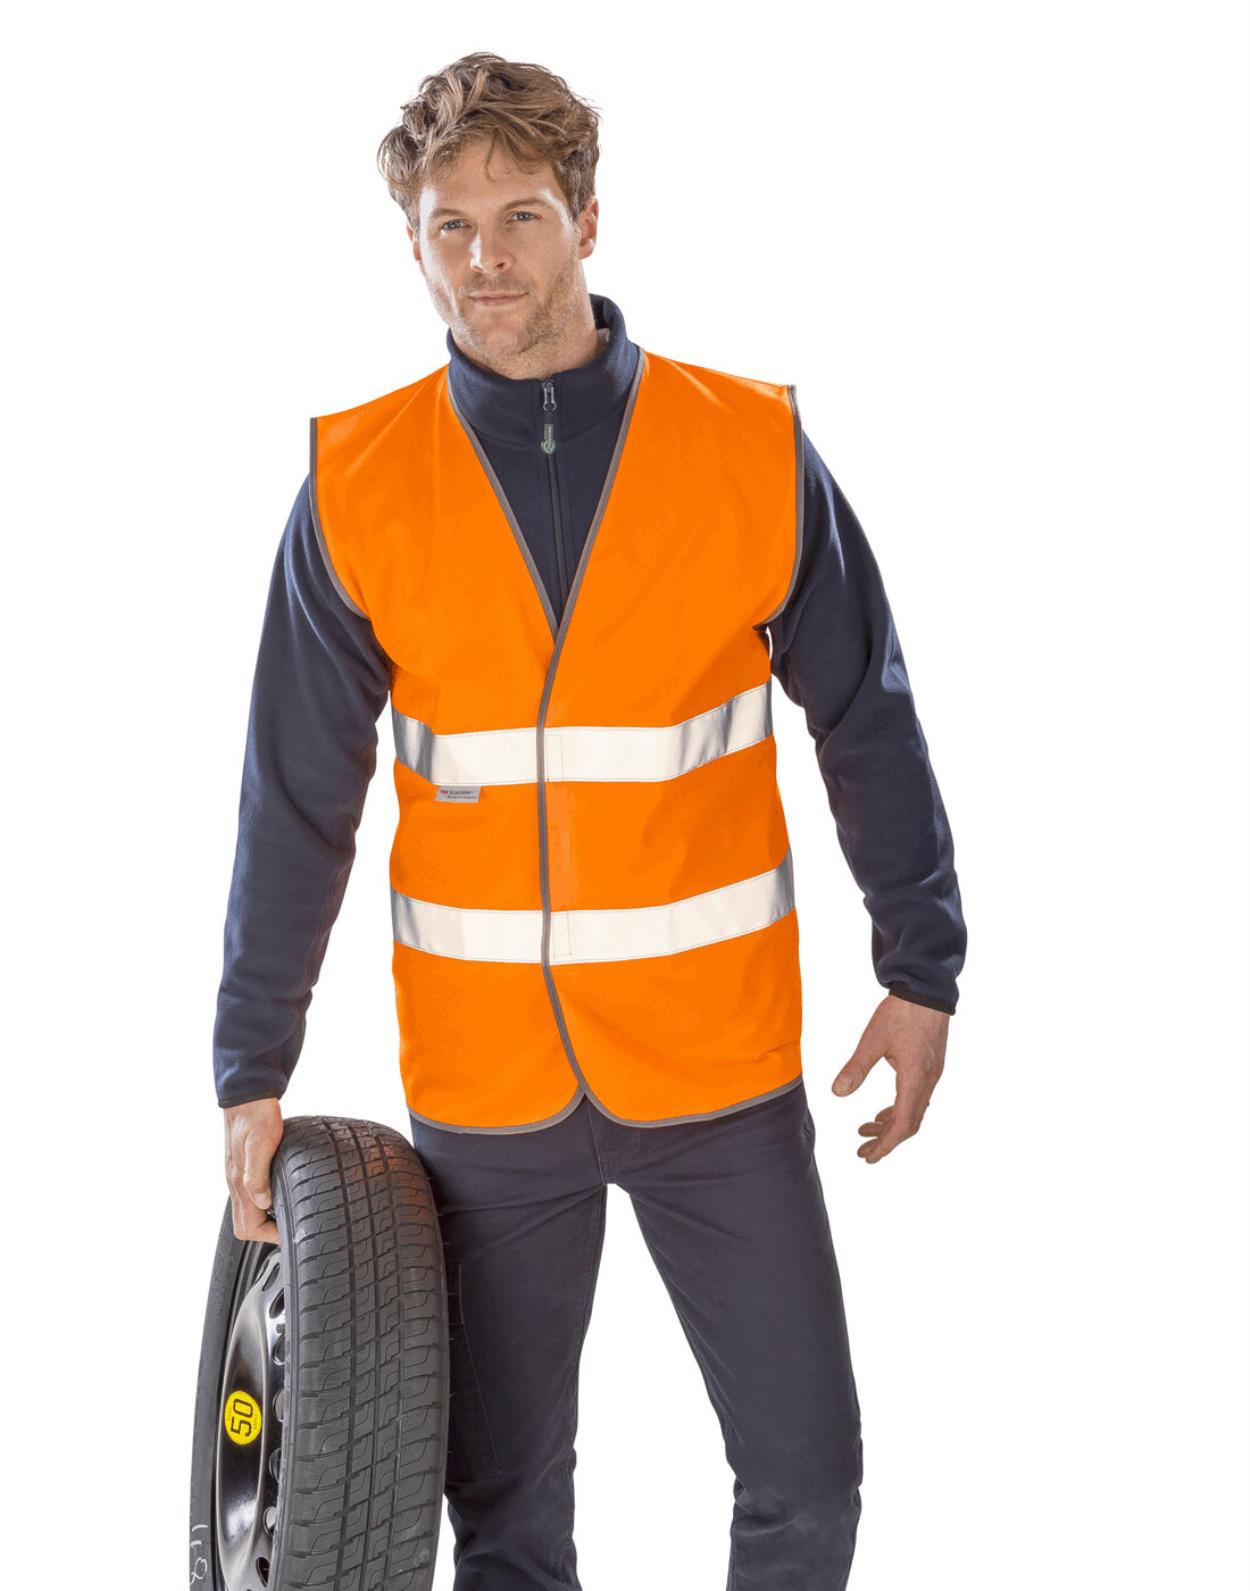 R211 Motorway Safety Vest Image 1